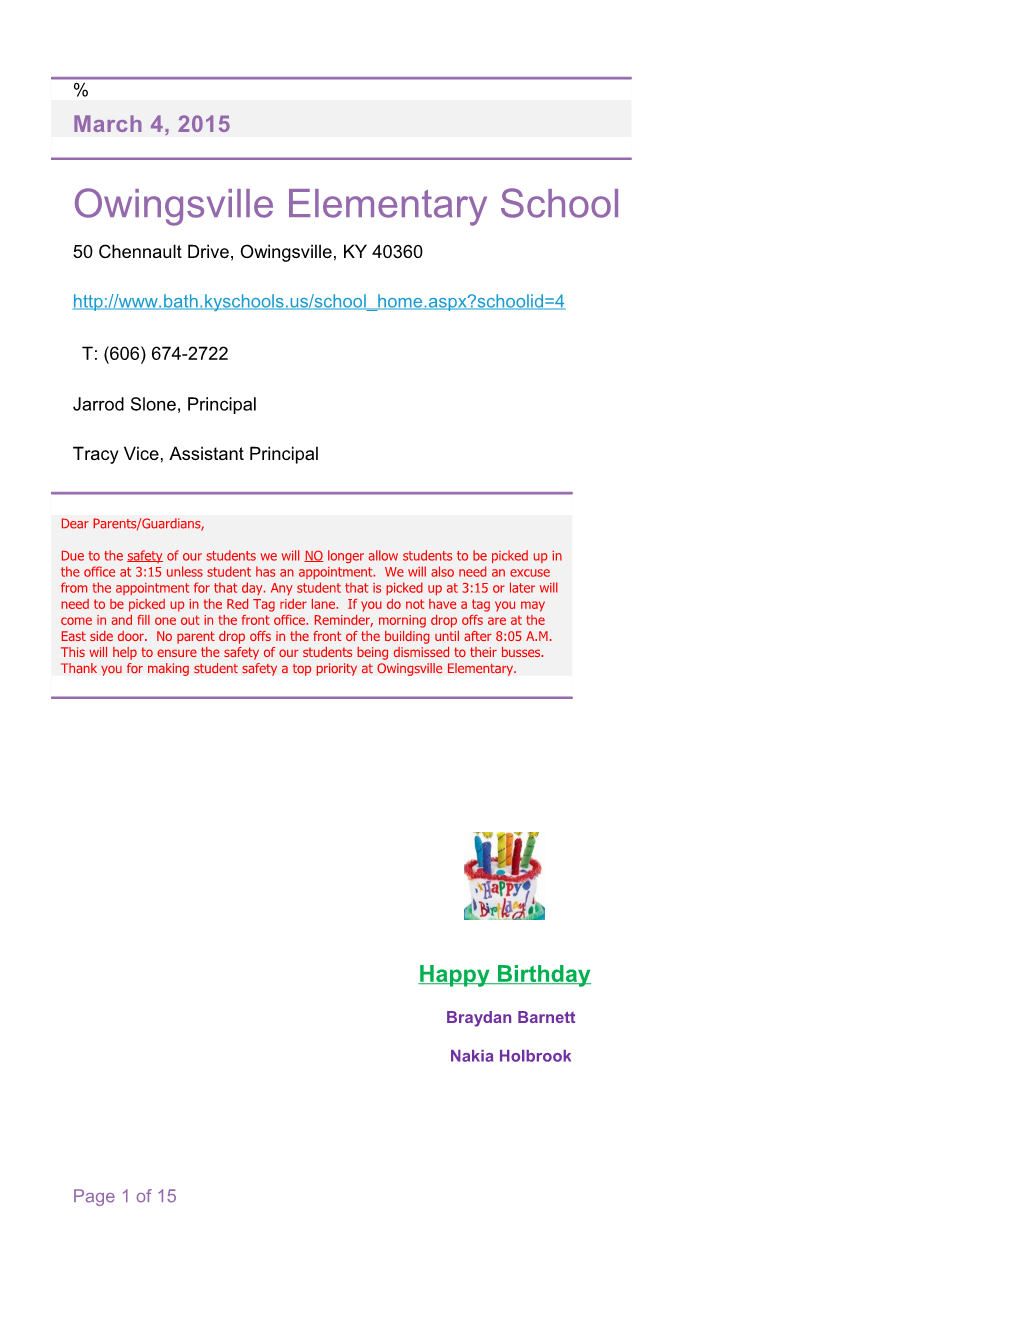 Owingsville Elementary School s1